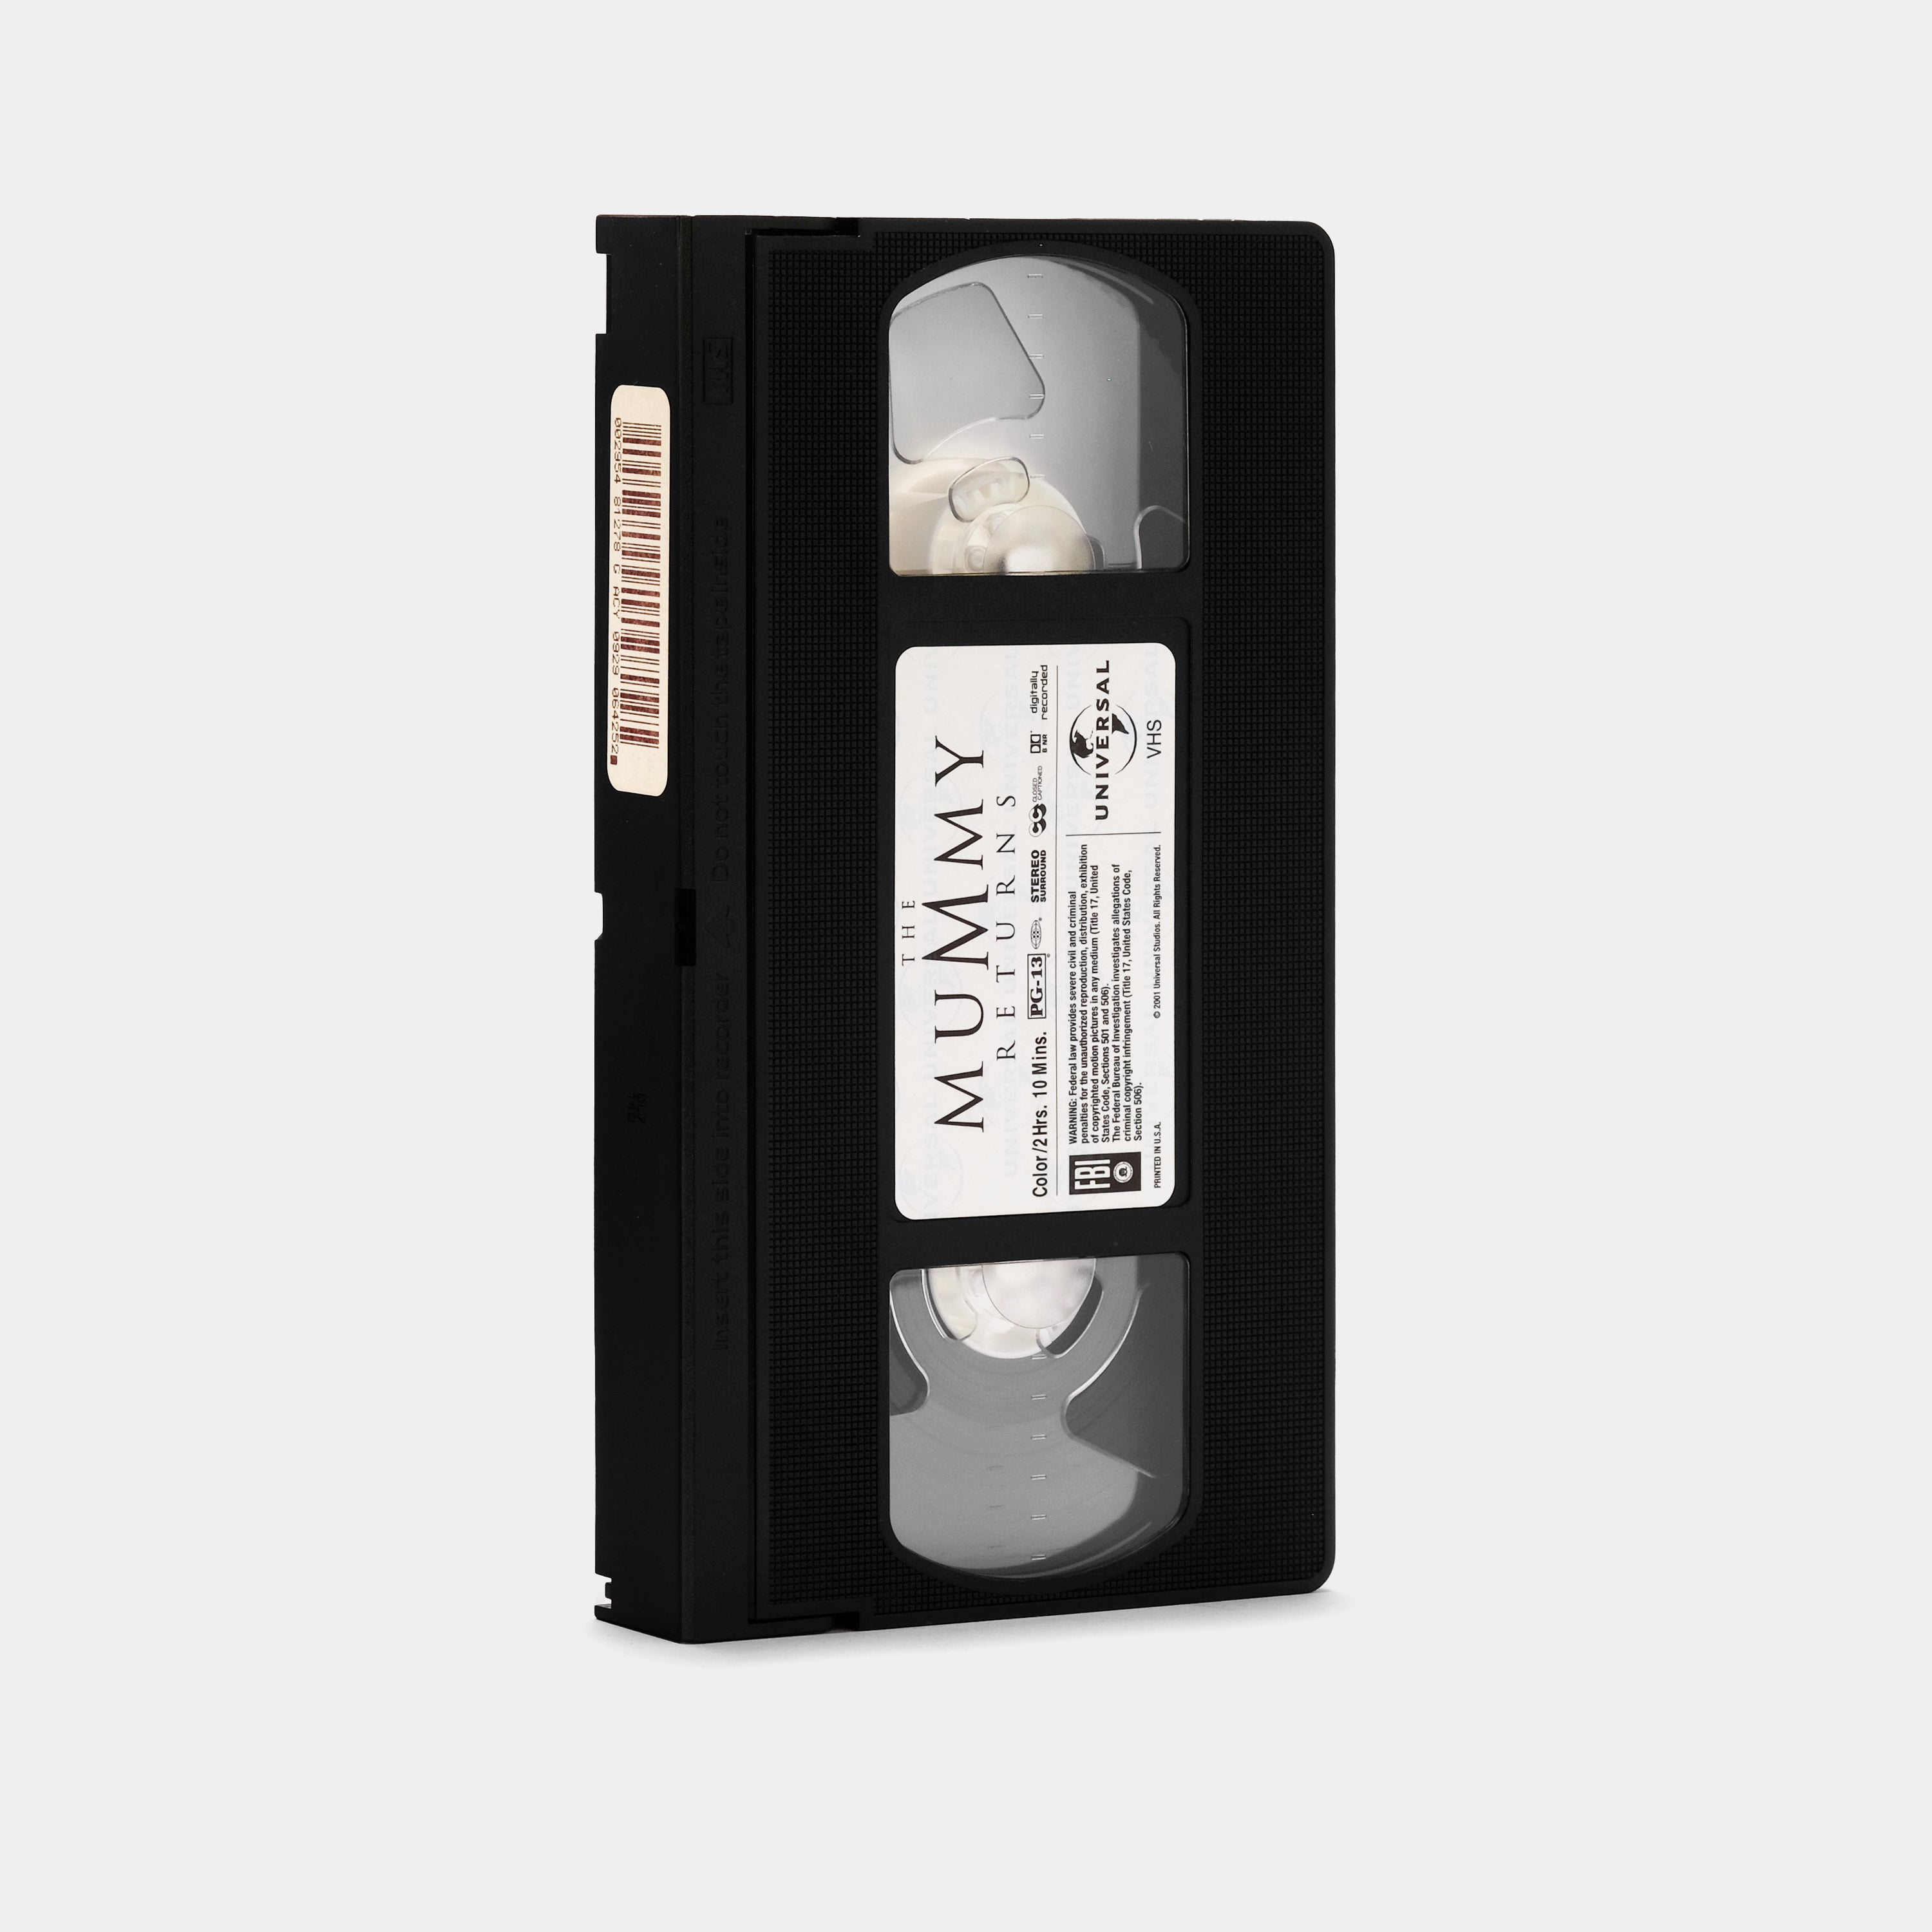 The Mummy Returns VHS Tape